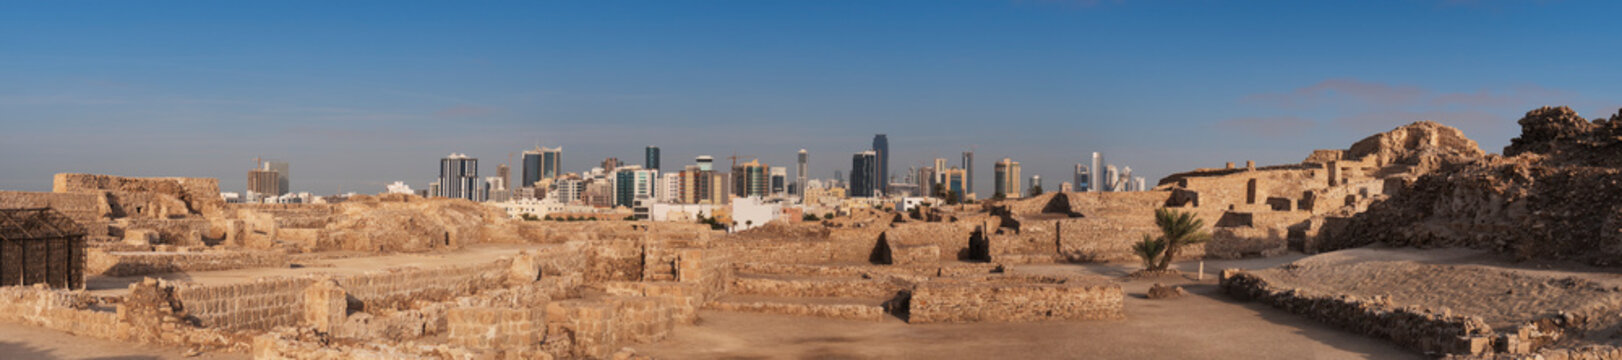 Manama city from Qal'at al-Bahrain fort 